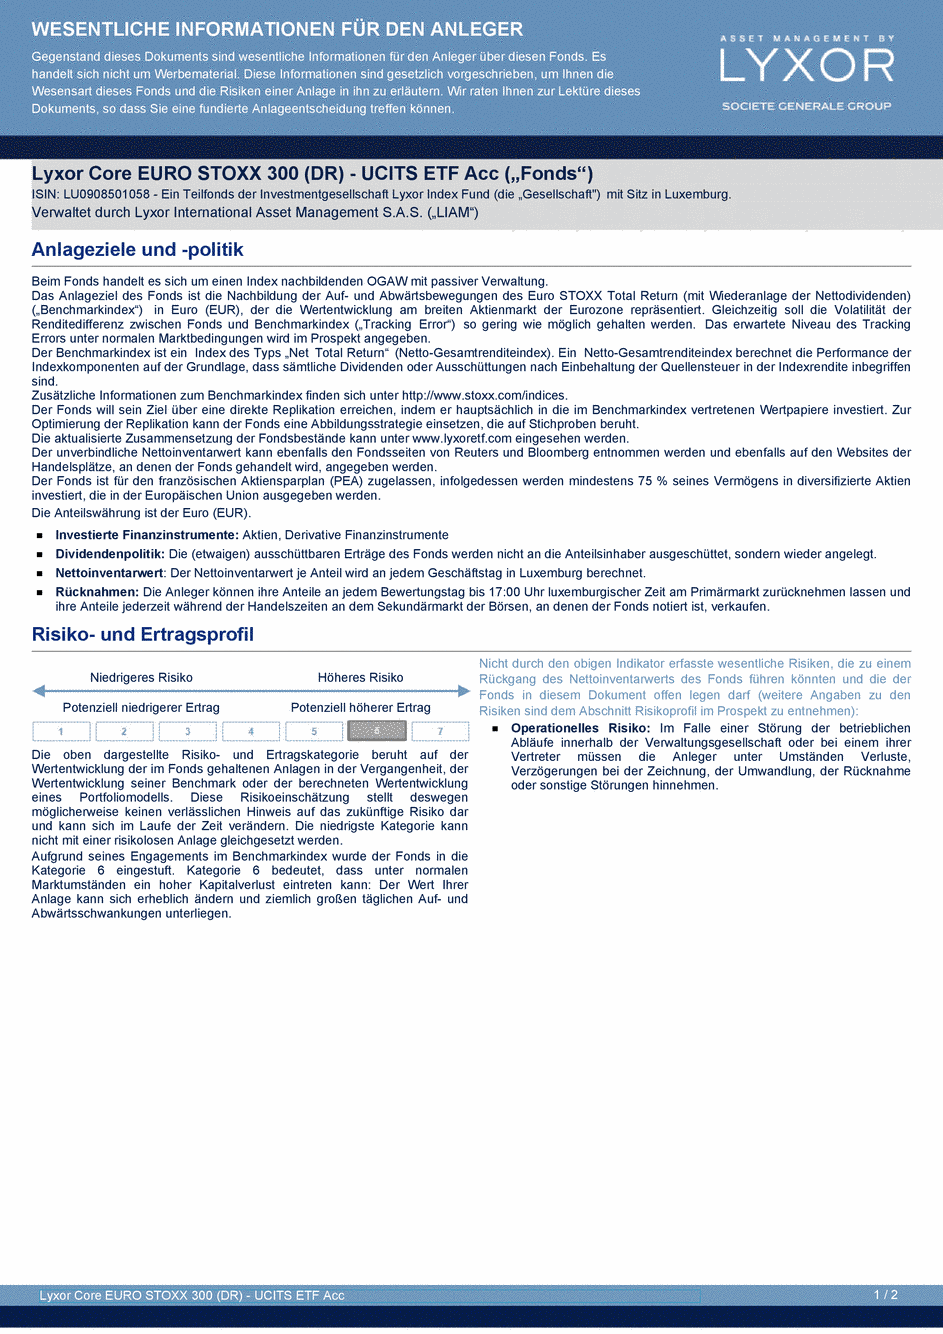 DICI Lyxor Core EURO STOXX 300 (DR) - UCITS ETF Acc - 10/07/2020 - Allemand